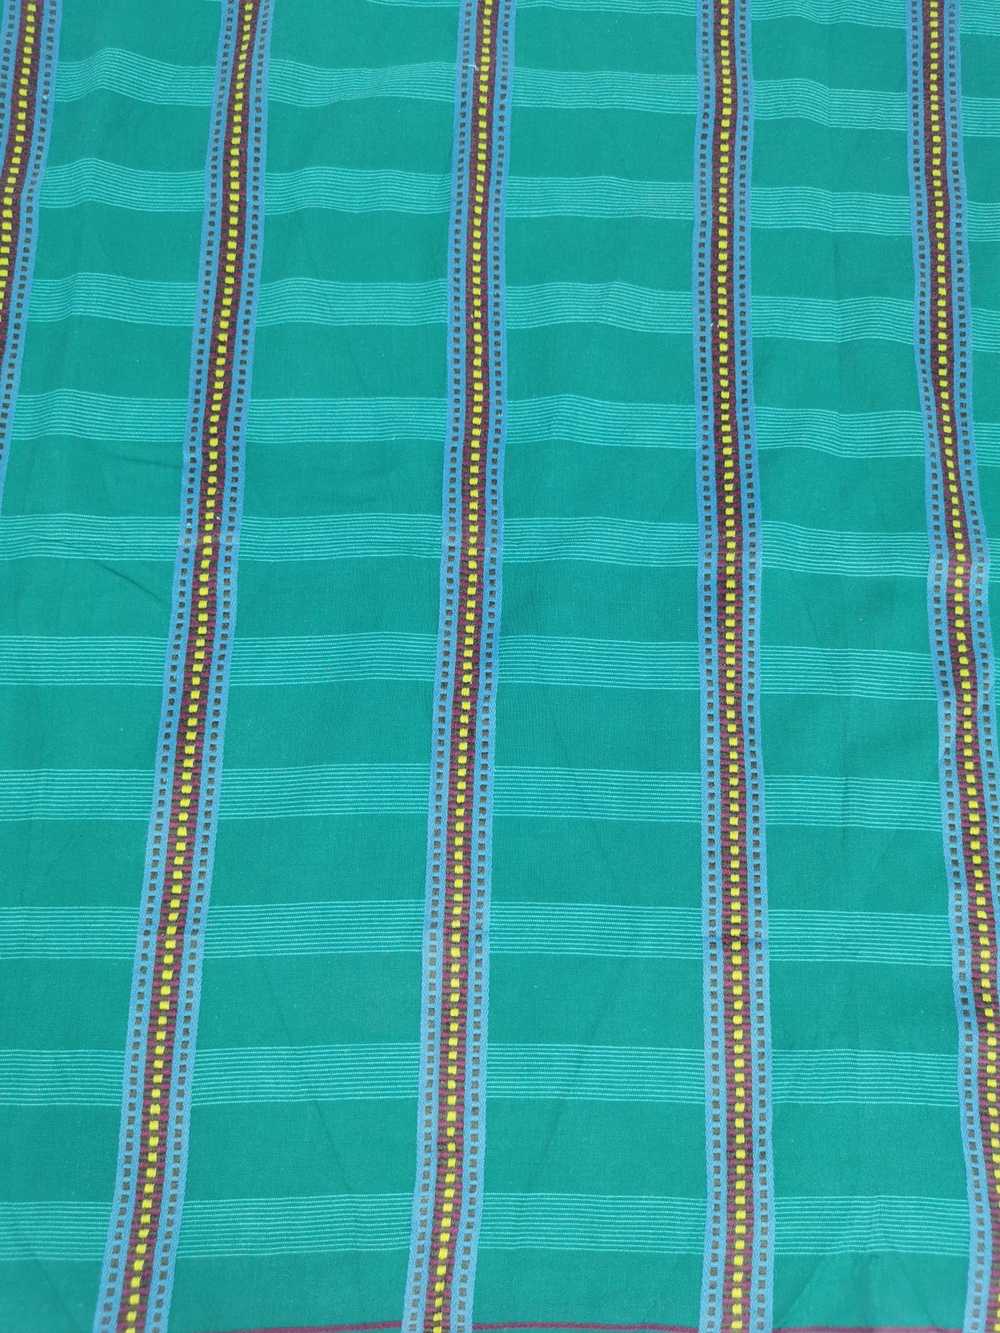 Kenzo Kenzo handkerchief bandana neckerchief - image 4